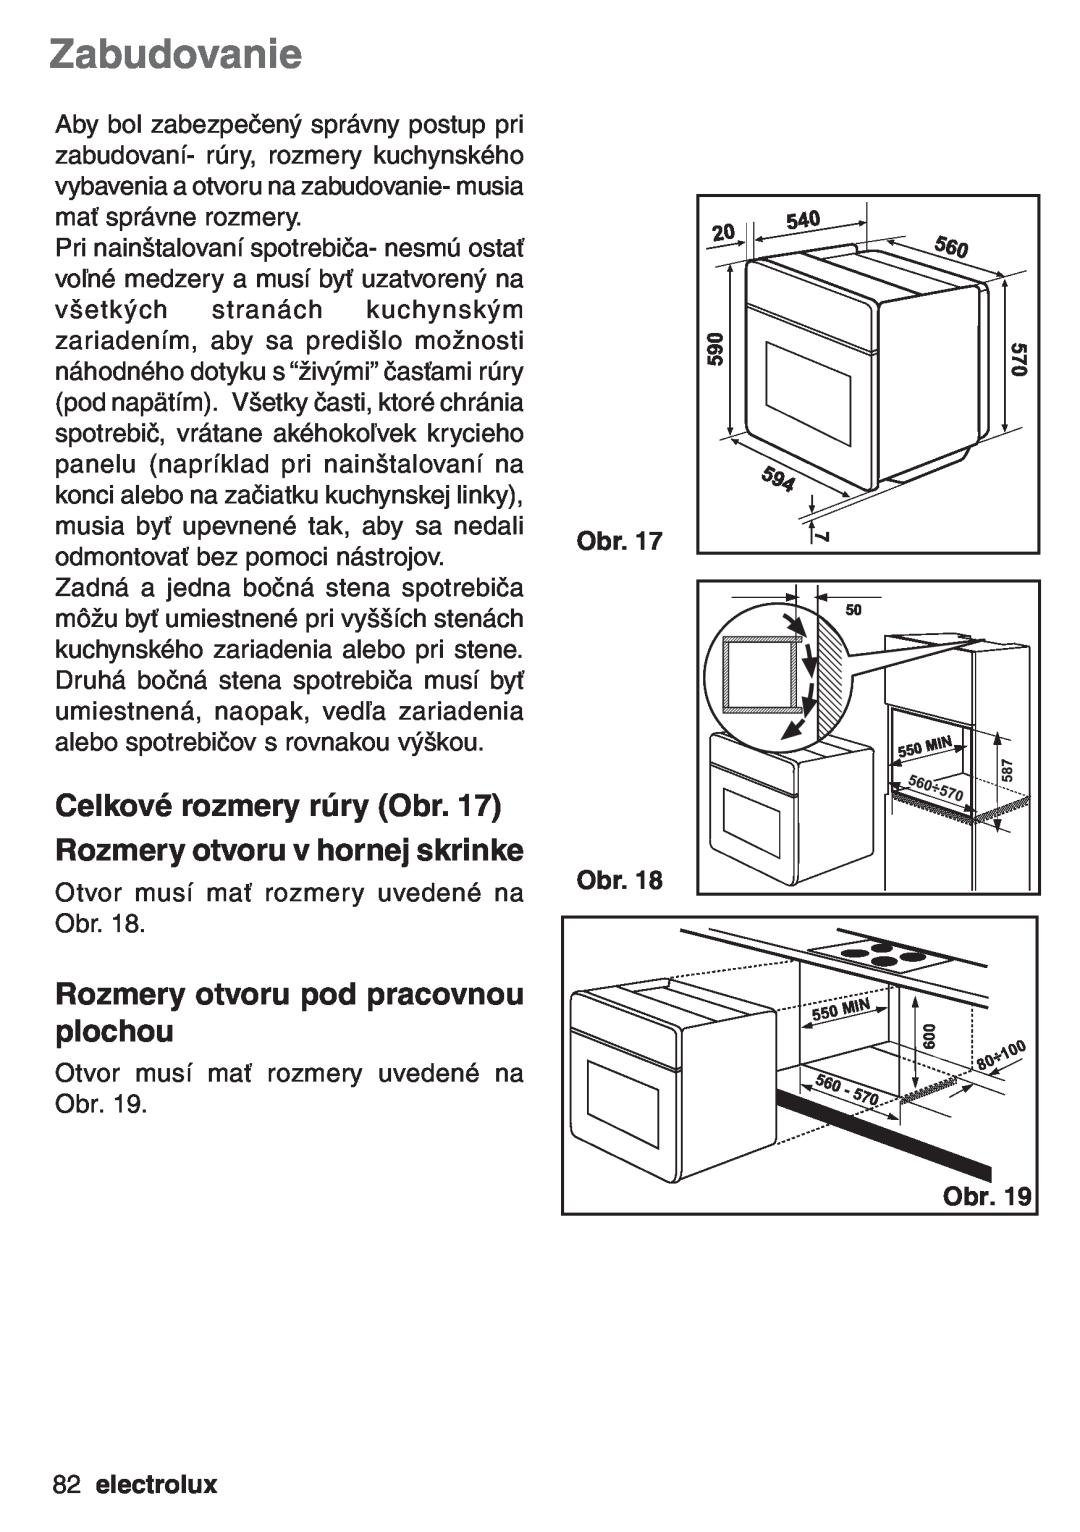 Electrolux EOB 53003 user manual Zabudovanie, Rozmery otvoru pod pracovnou plochou, electrolux, Obr Obr 